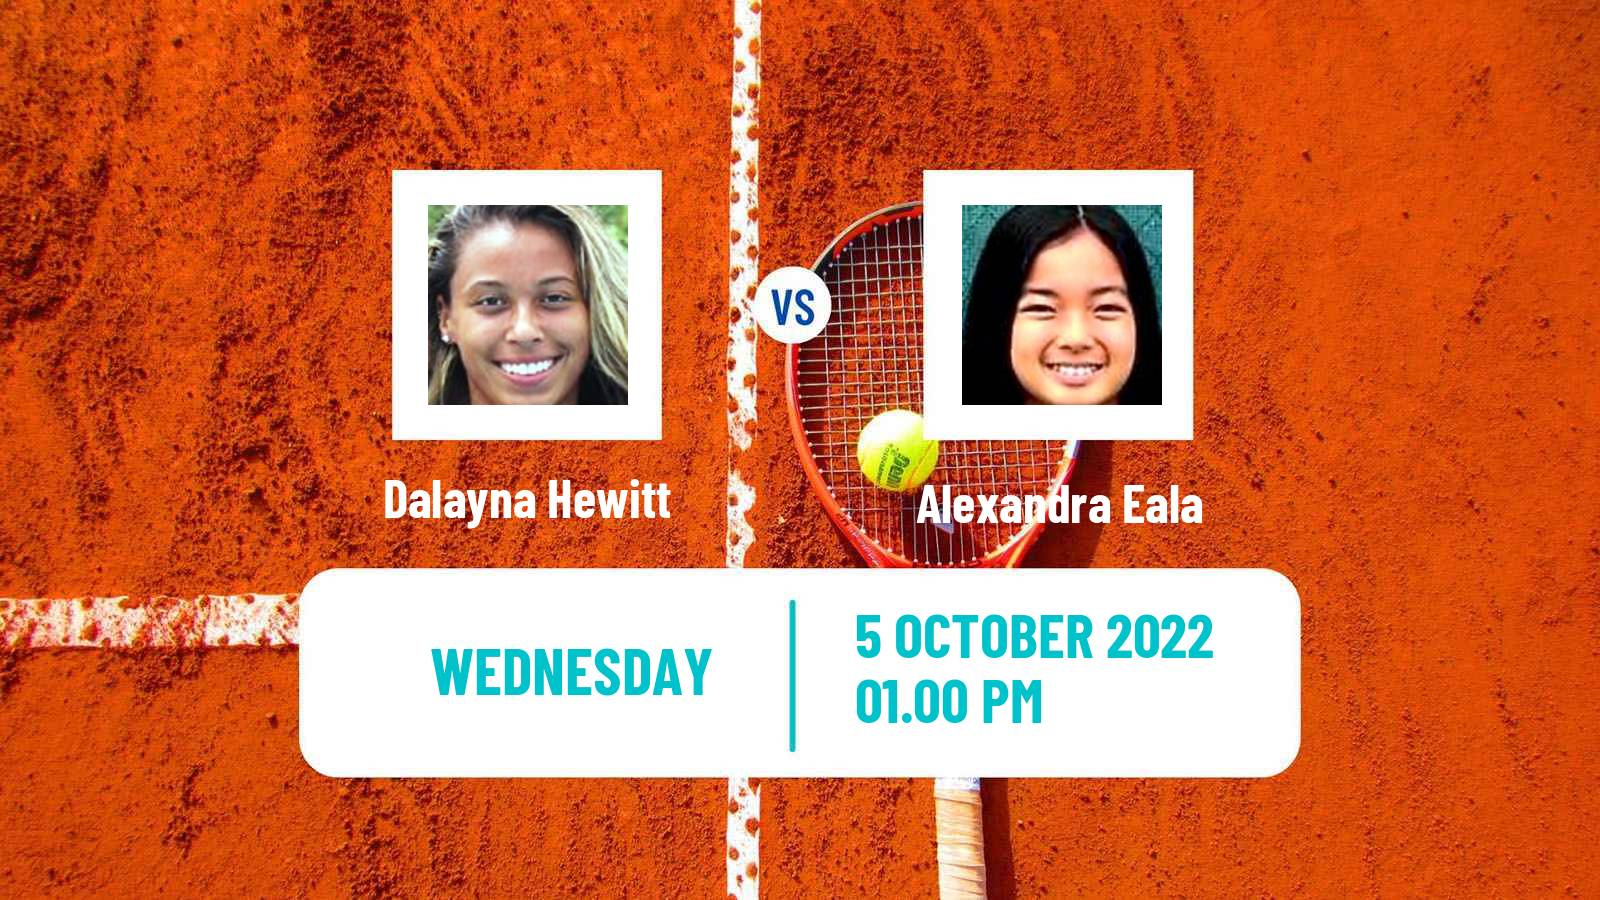 Tennis ITF Tournaments Dalayna Hewitt - Alexandra Eala